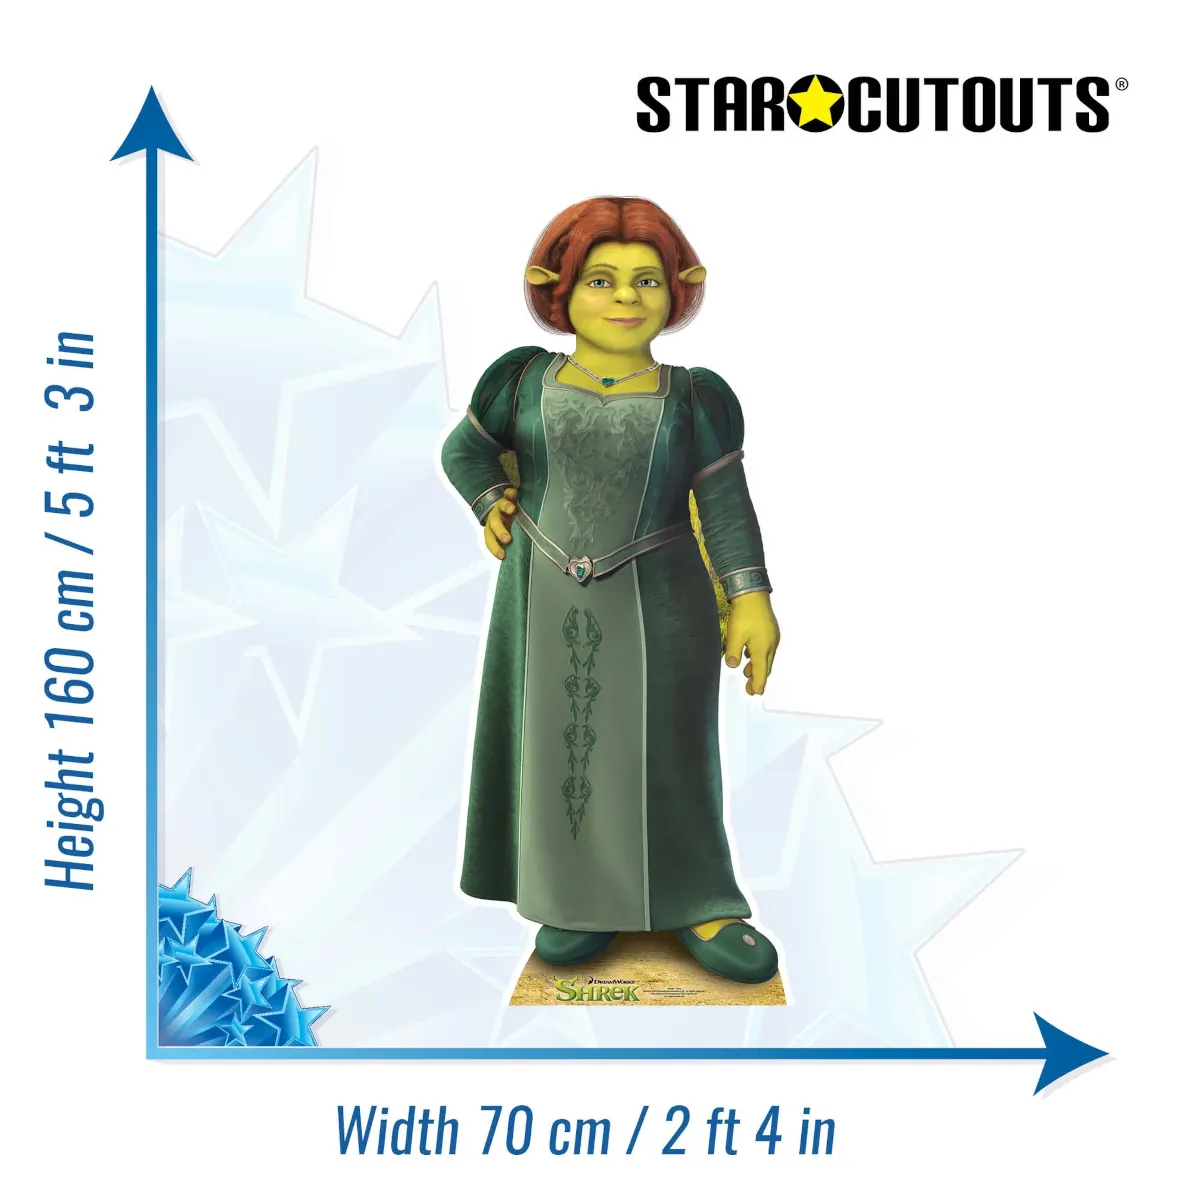 SC786 Princess Fiona (DreamWorks Animation Shrek) Official Lifesize Cardboard Cutout Standee Size